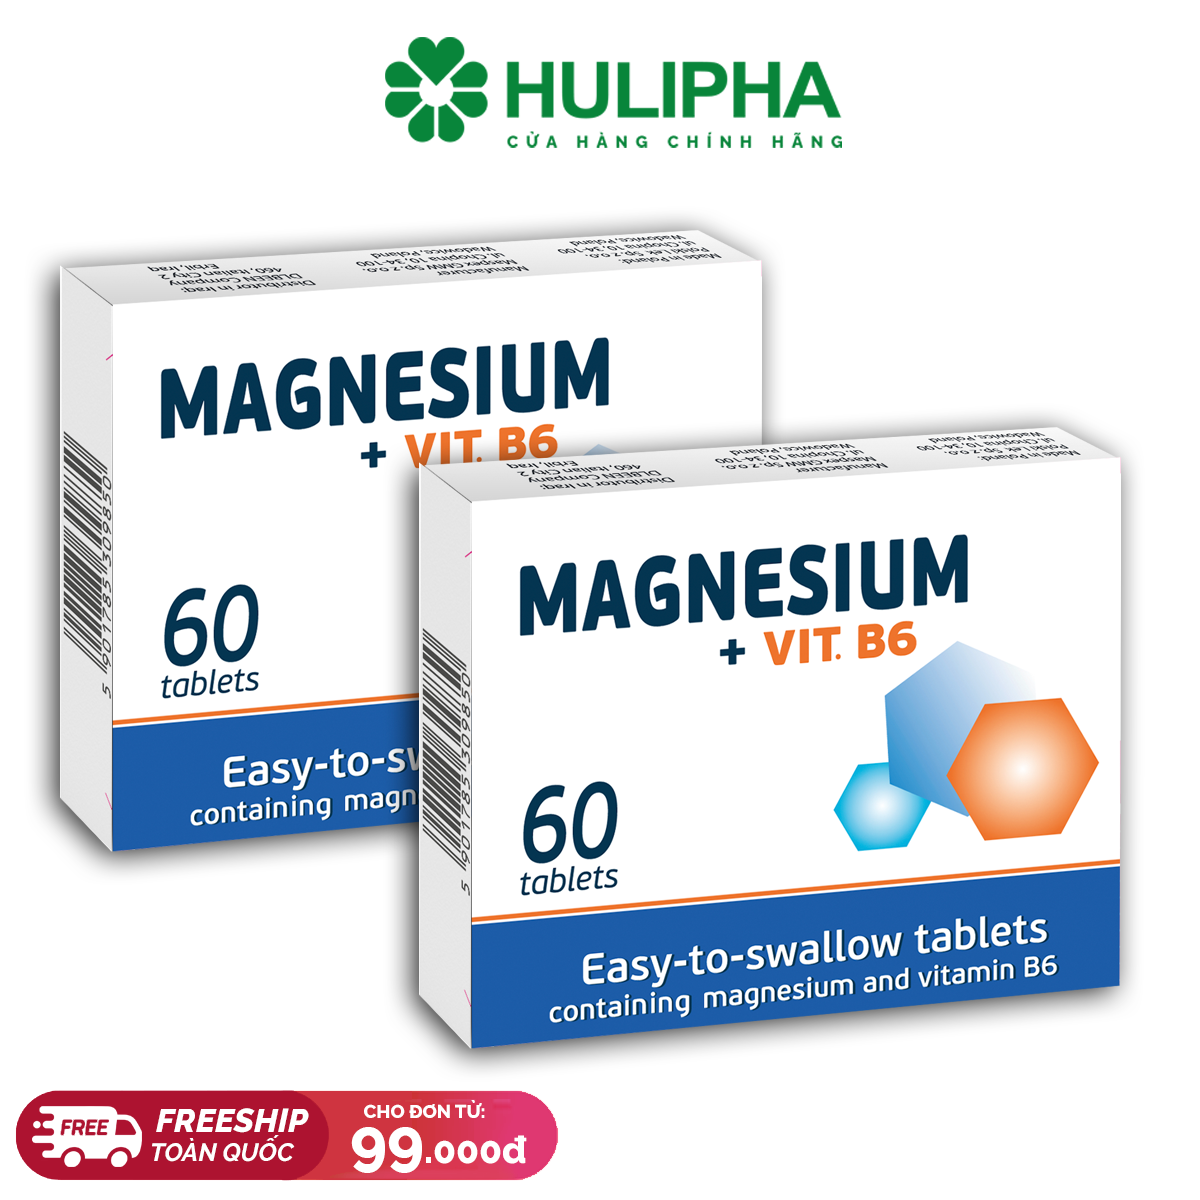 Magnesium+Vit.B6 Hộp 2 Vỉ x 30 Viên.